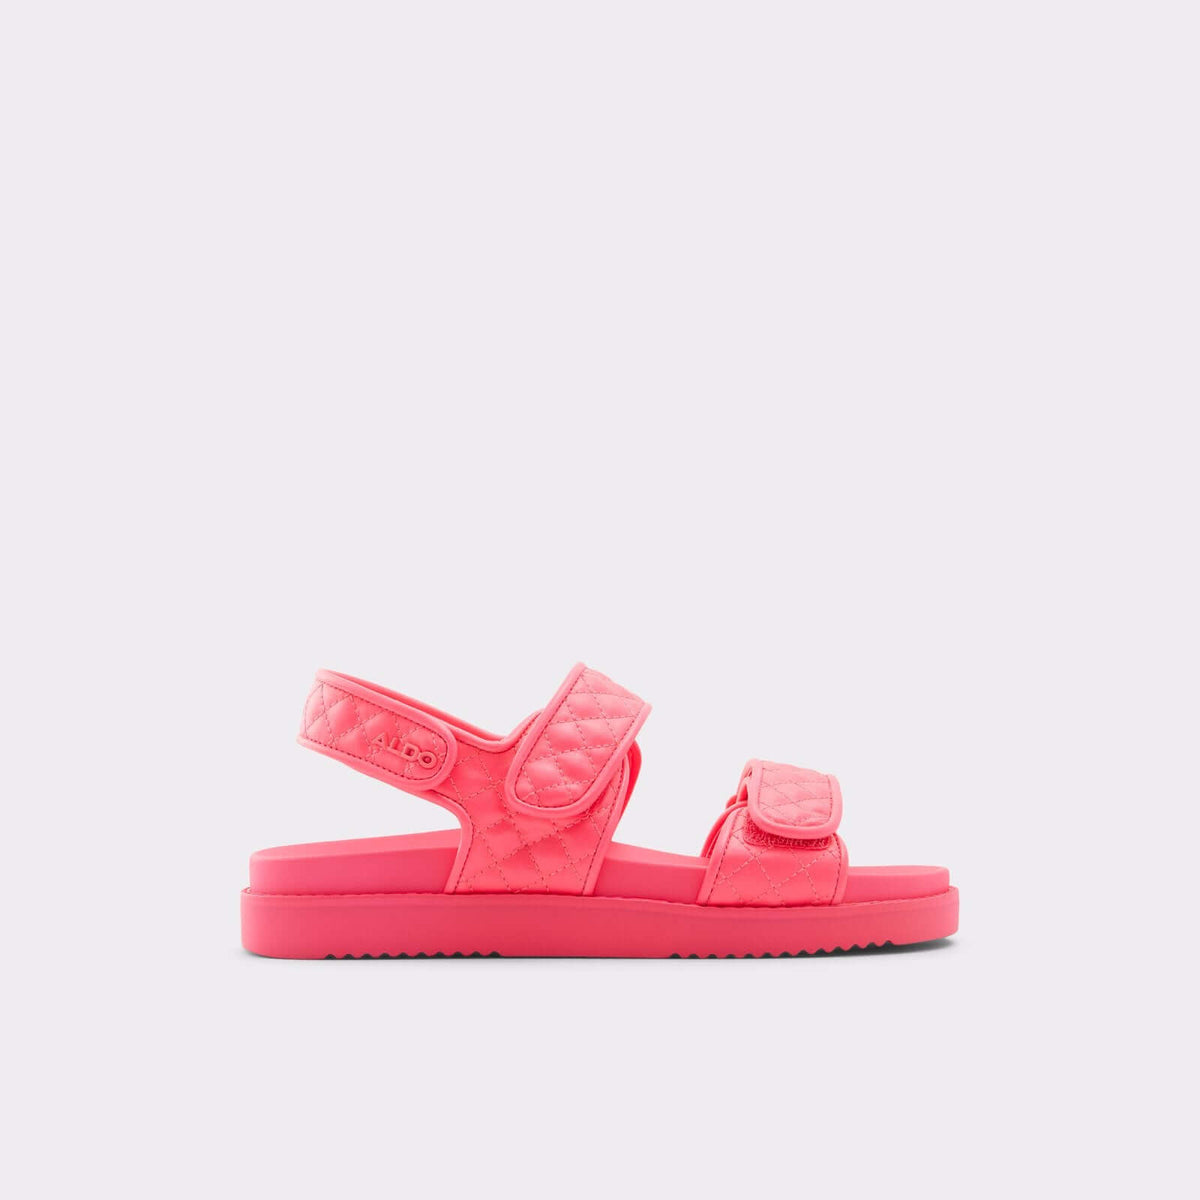 Aldo Women's Flat Sandals Eowiliwia (Bright Pink) – ALDO Shoes UK